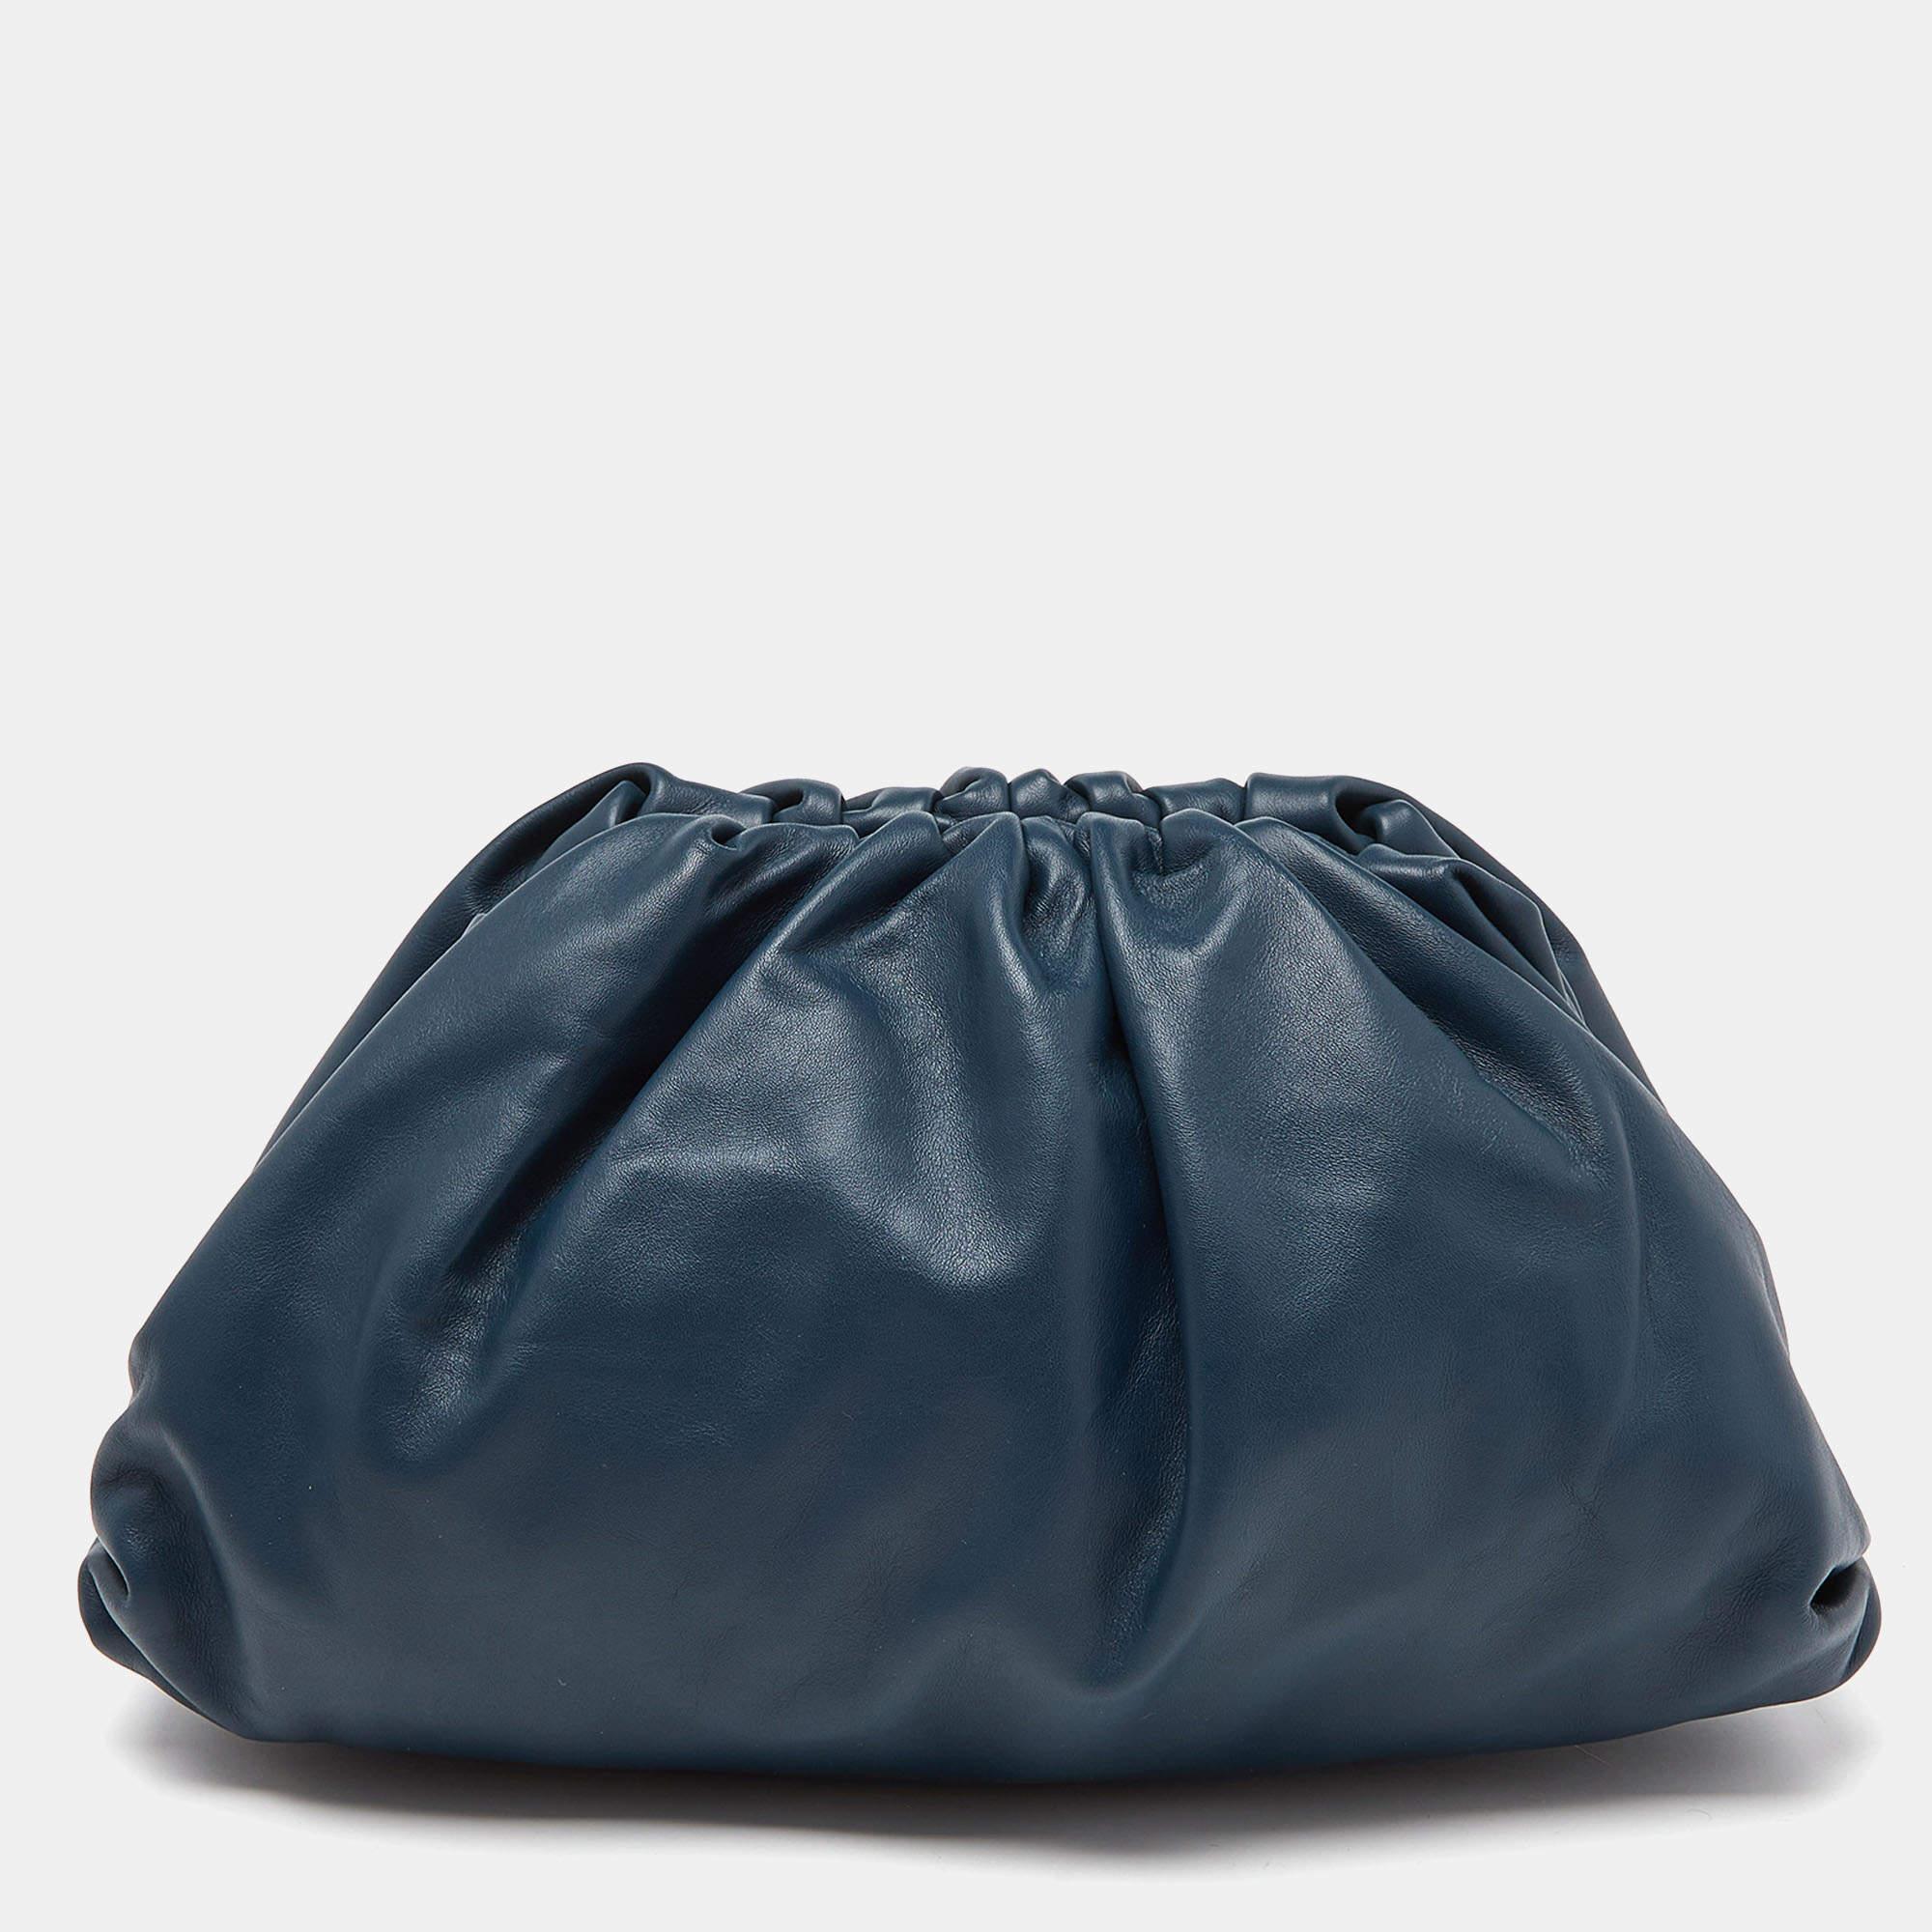 Bottega Veneta Teal Blue Leather The Pouch Clutch For Sale 6